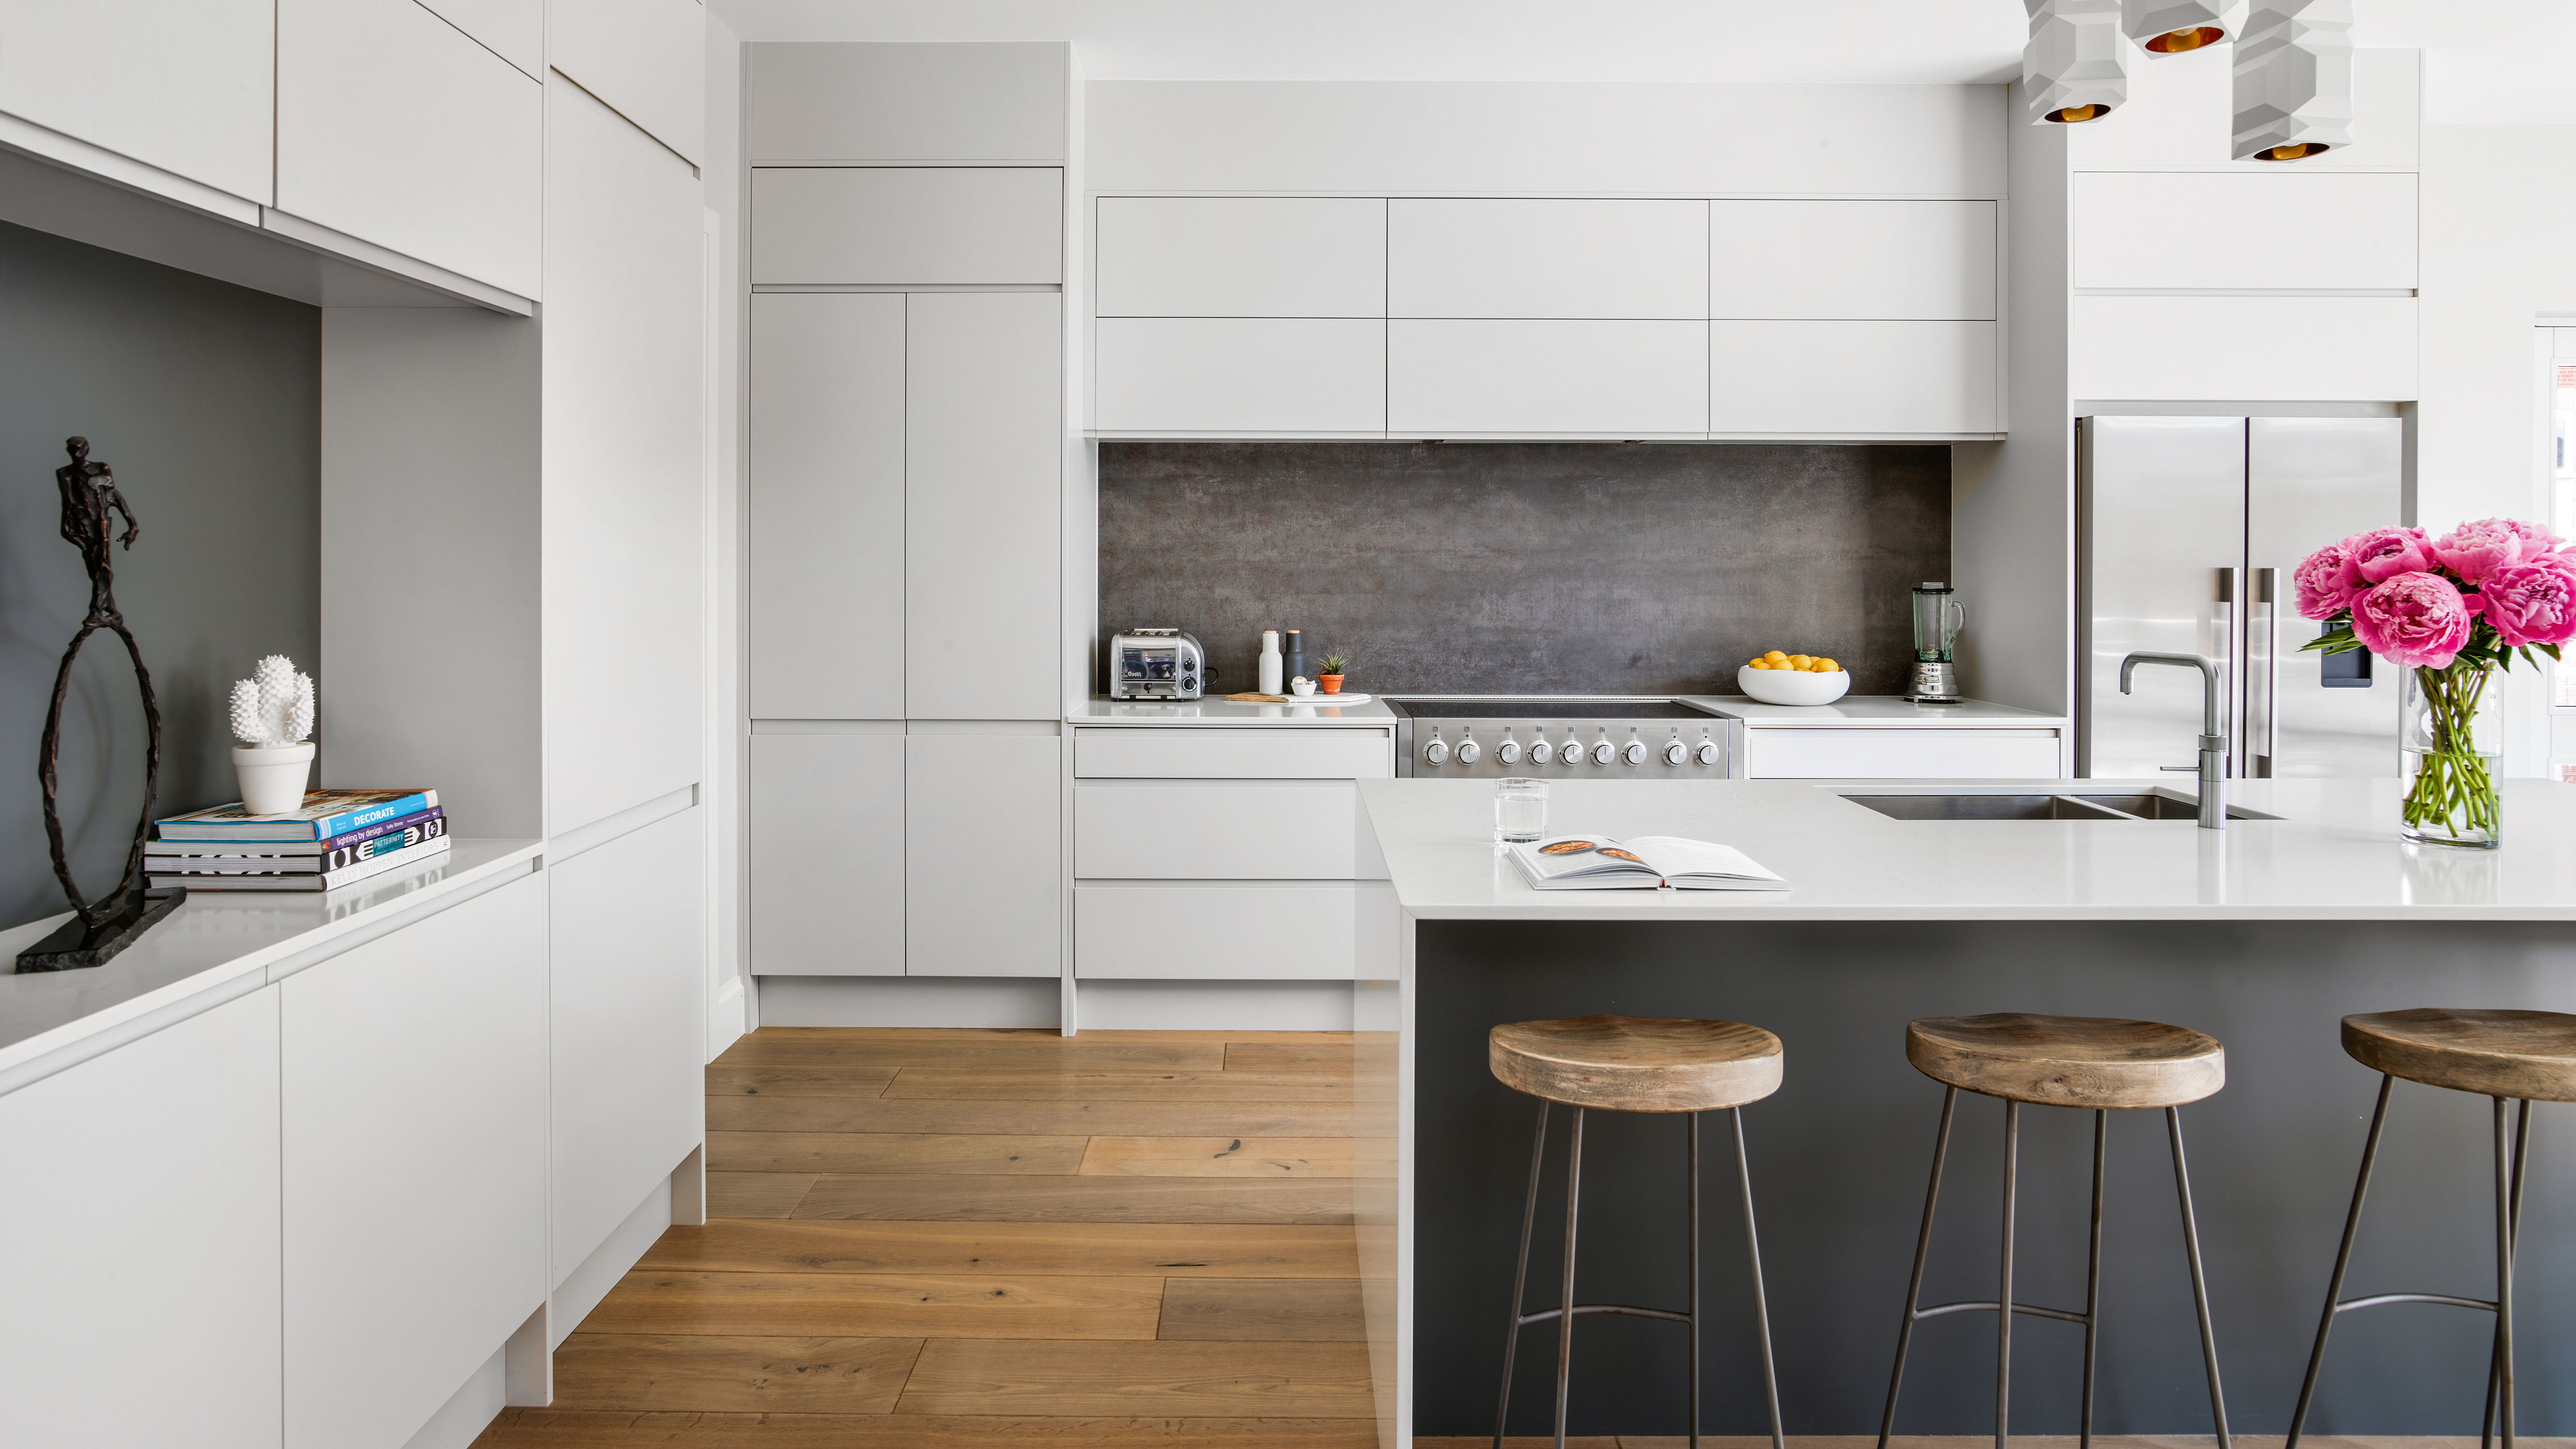 Minimalist kitchen ideas: 10 simple schemes for the modern home | Homes &  Gardens